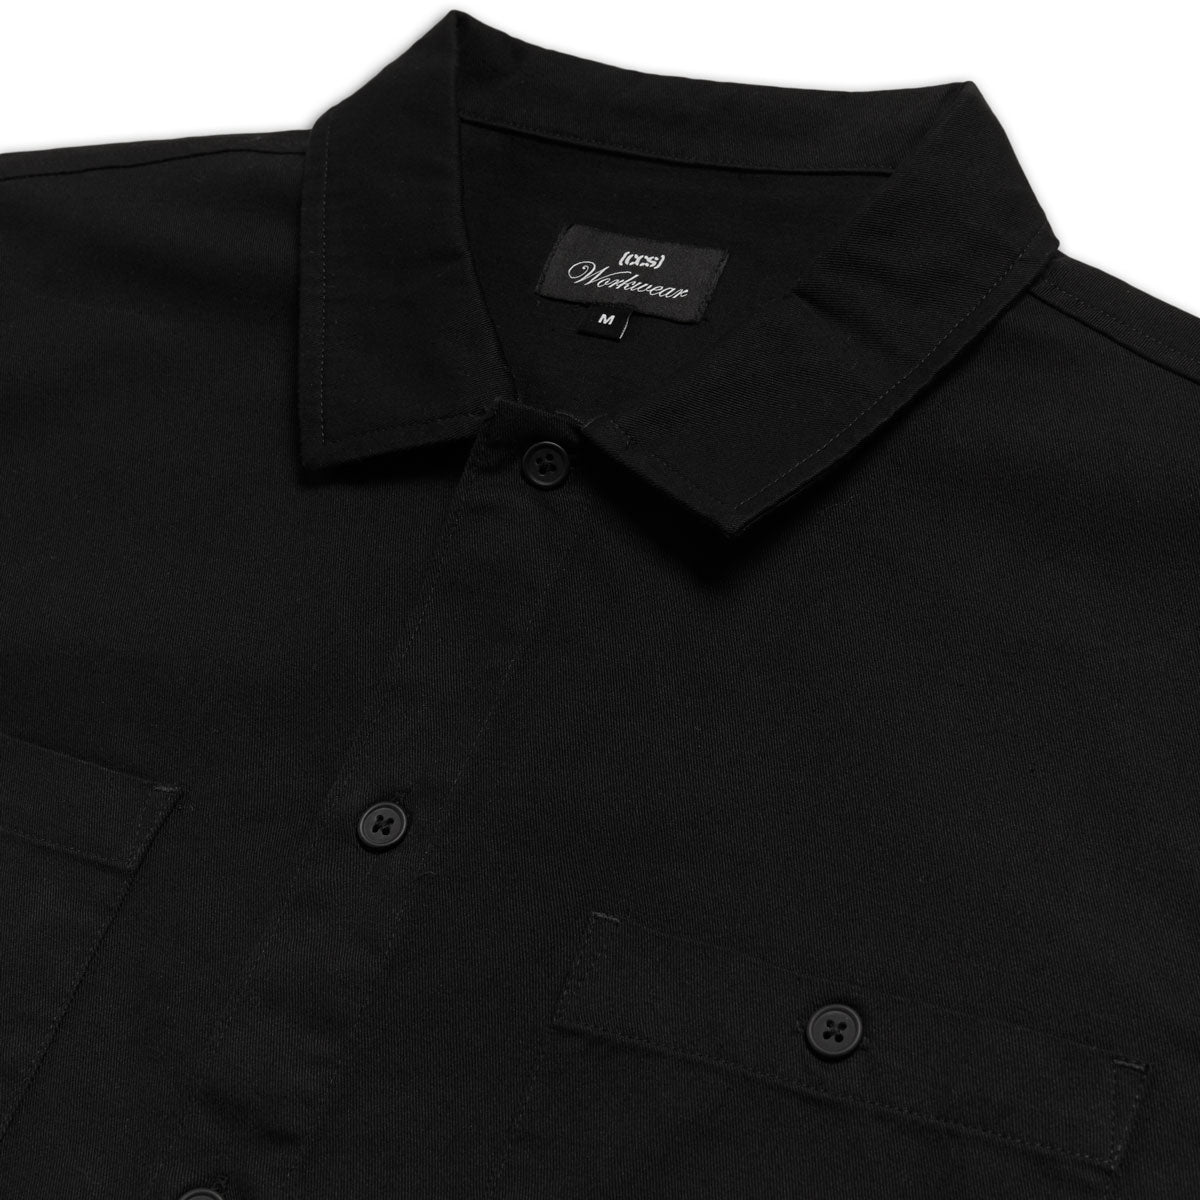 CCS Heavy Cotton Work Shirt - Black image 5